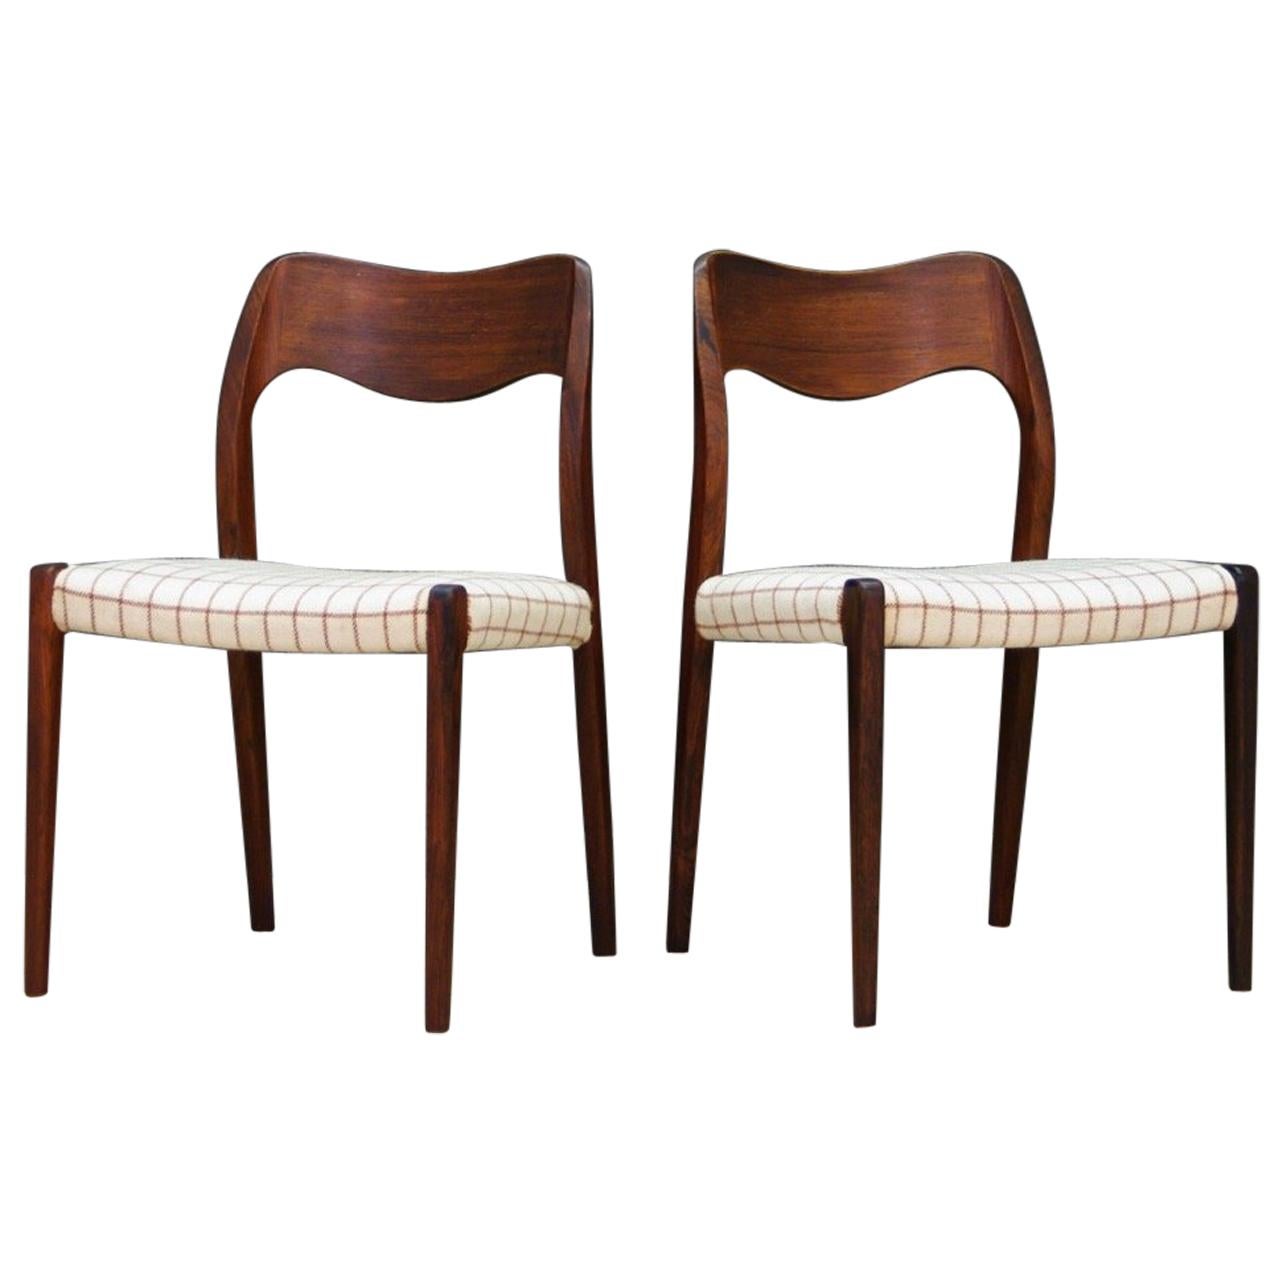 N. O. Moller Chairs Rosewood Danish Design